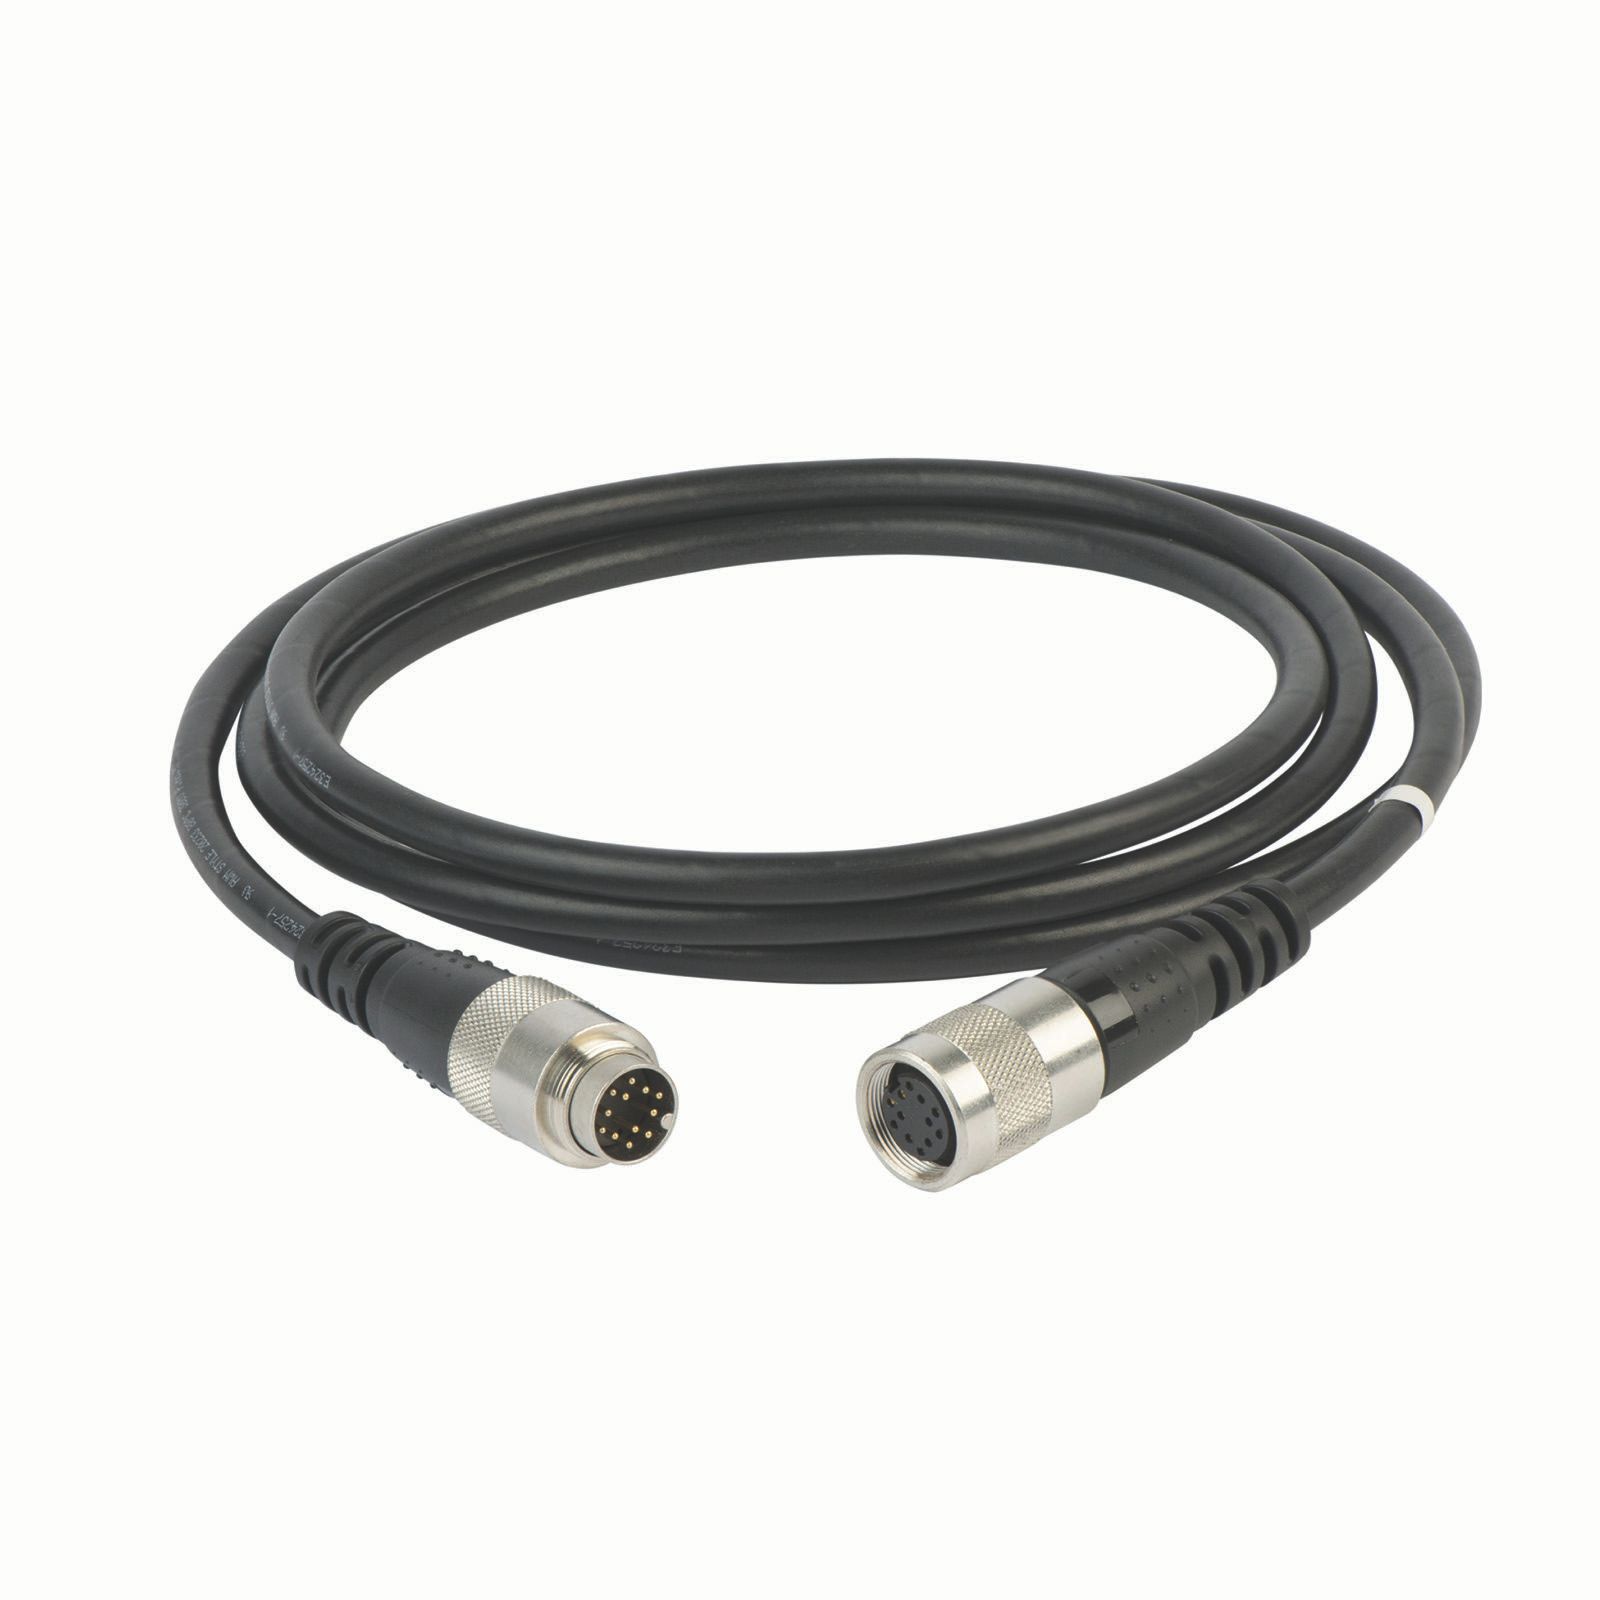 Tool cable 1.5m Produktfoto